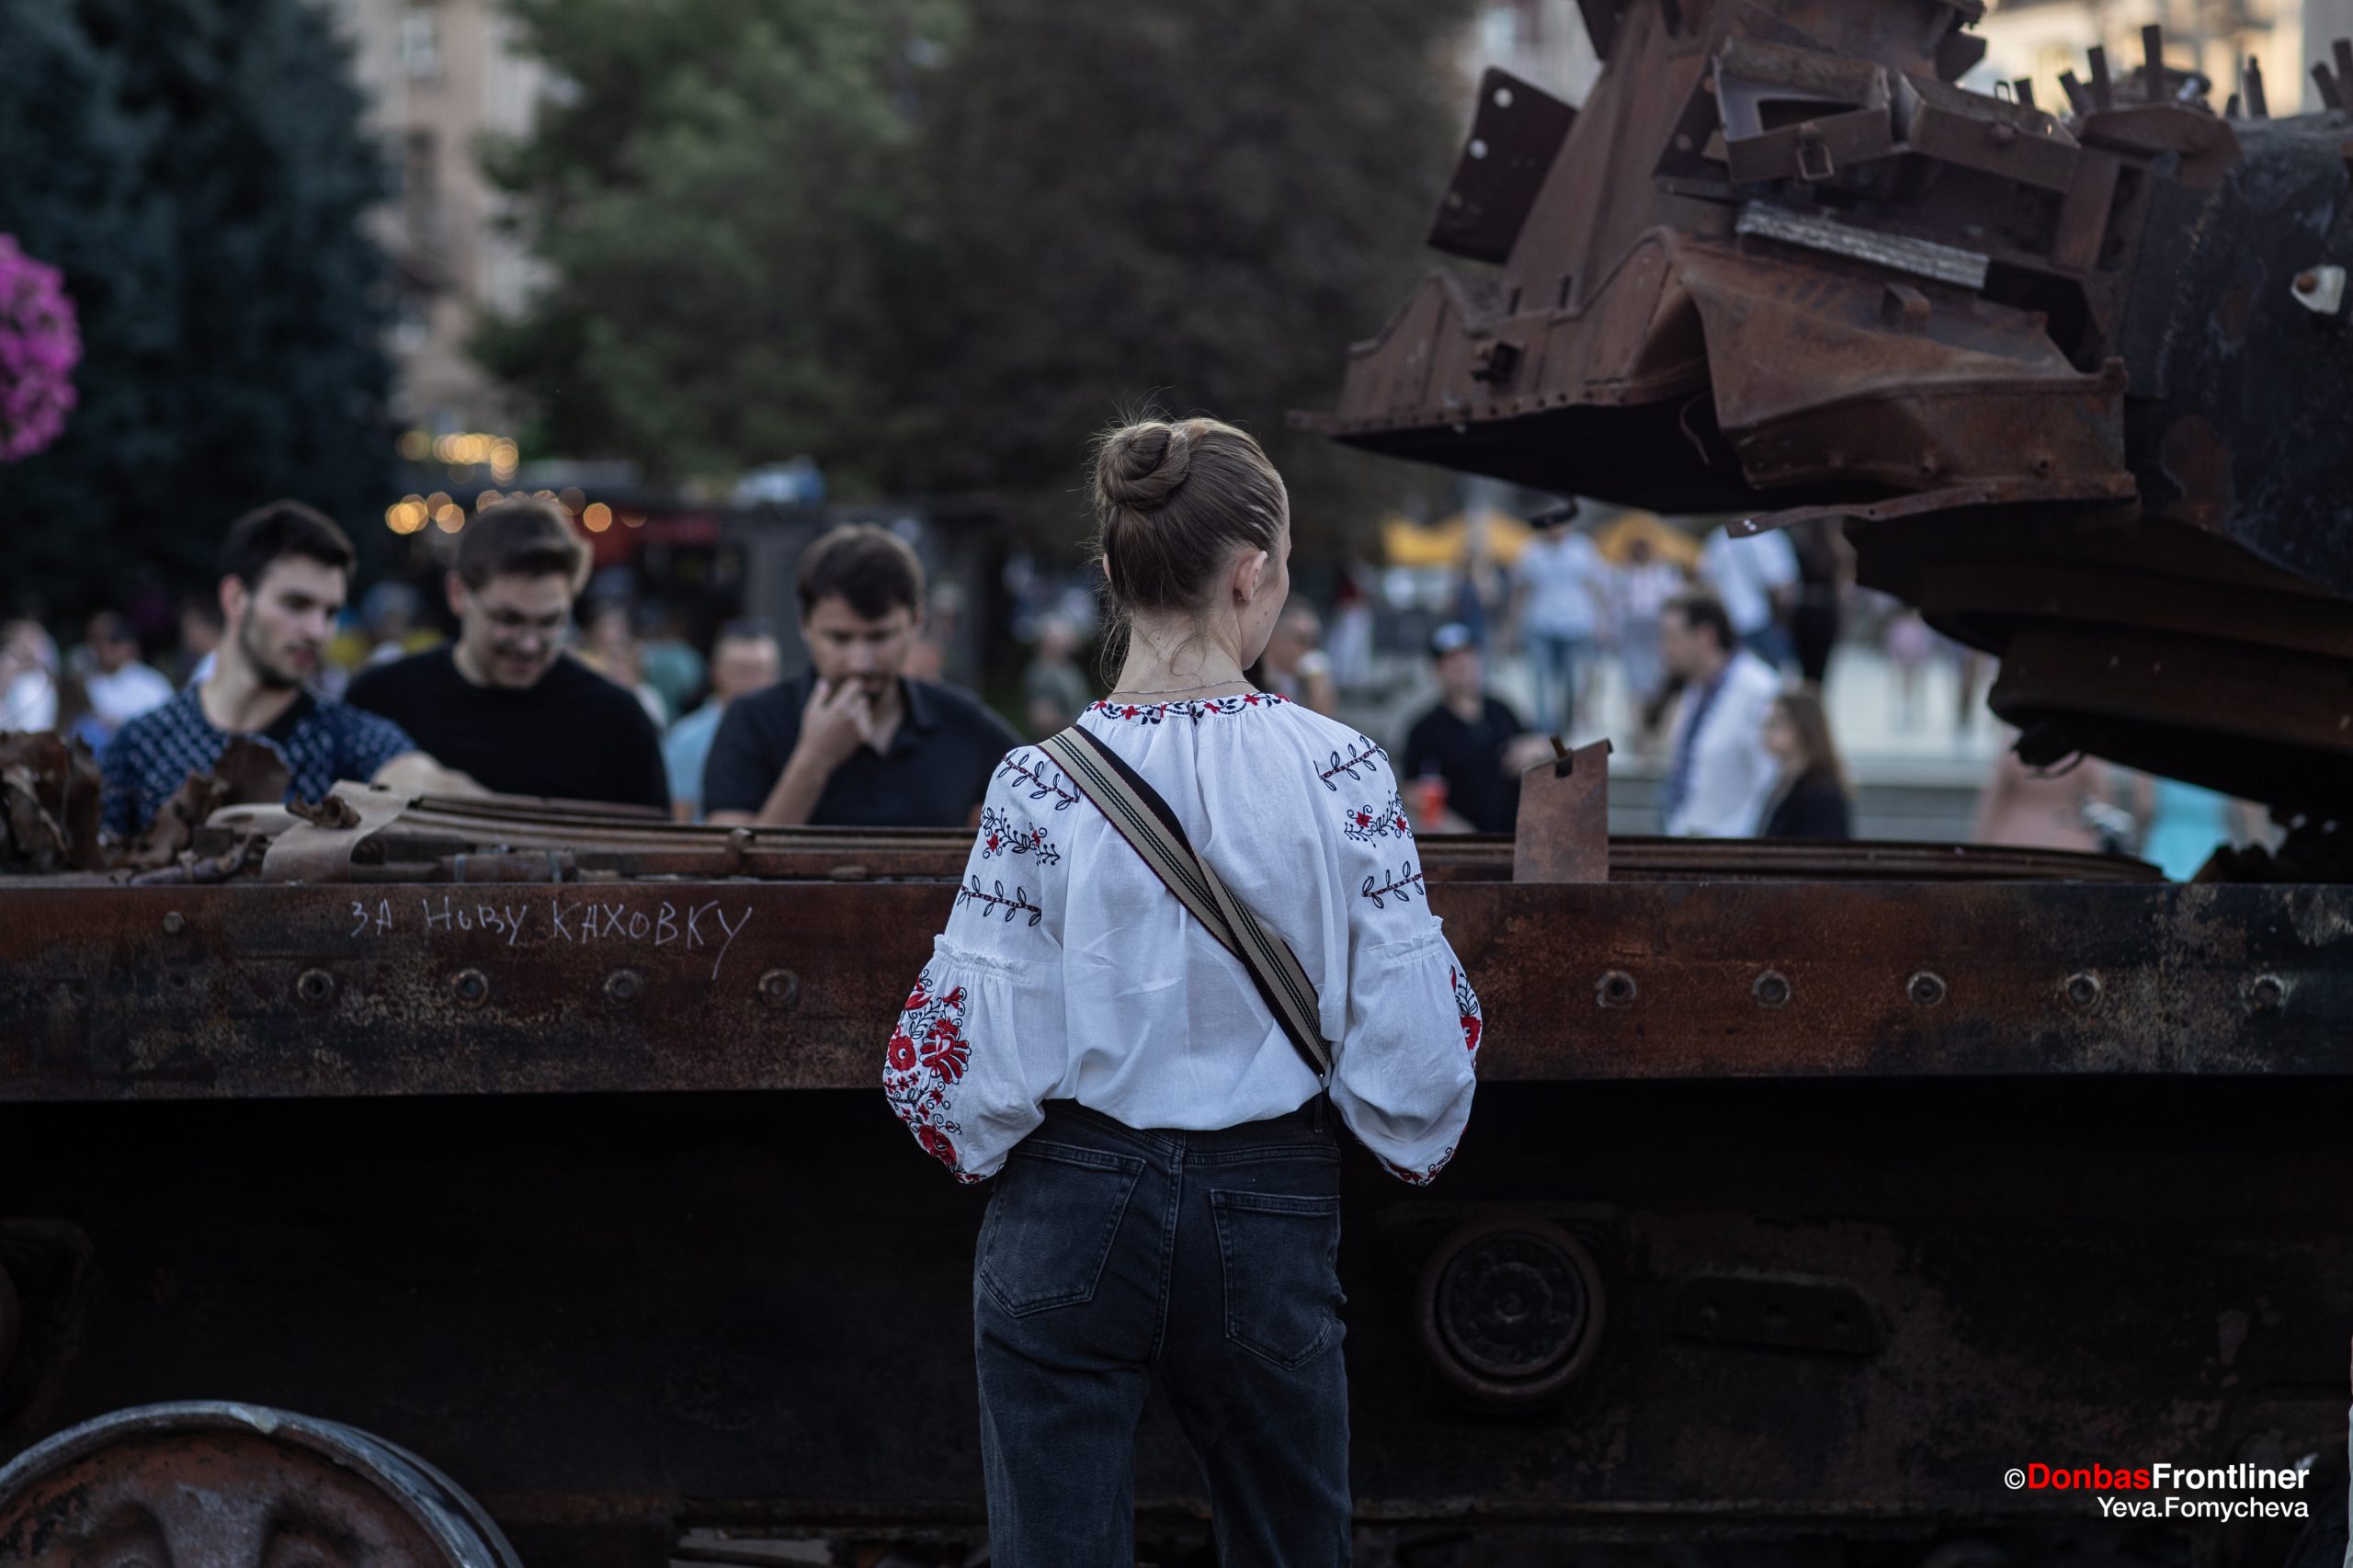 Donbas Frontliner / Дівчина оглядає експонат.